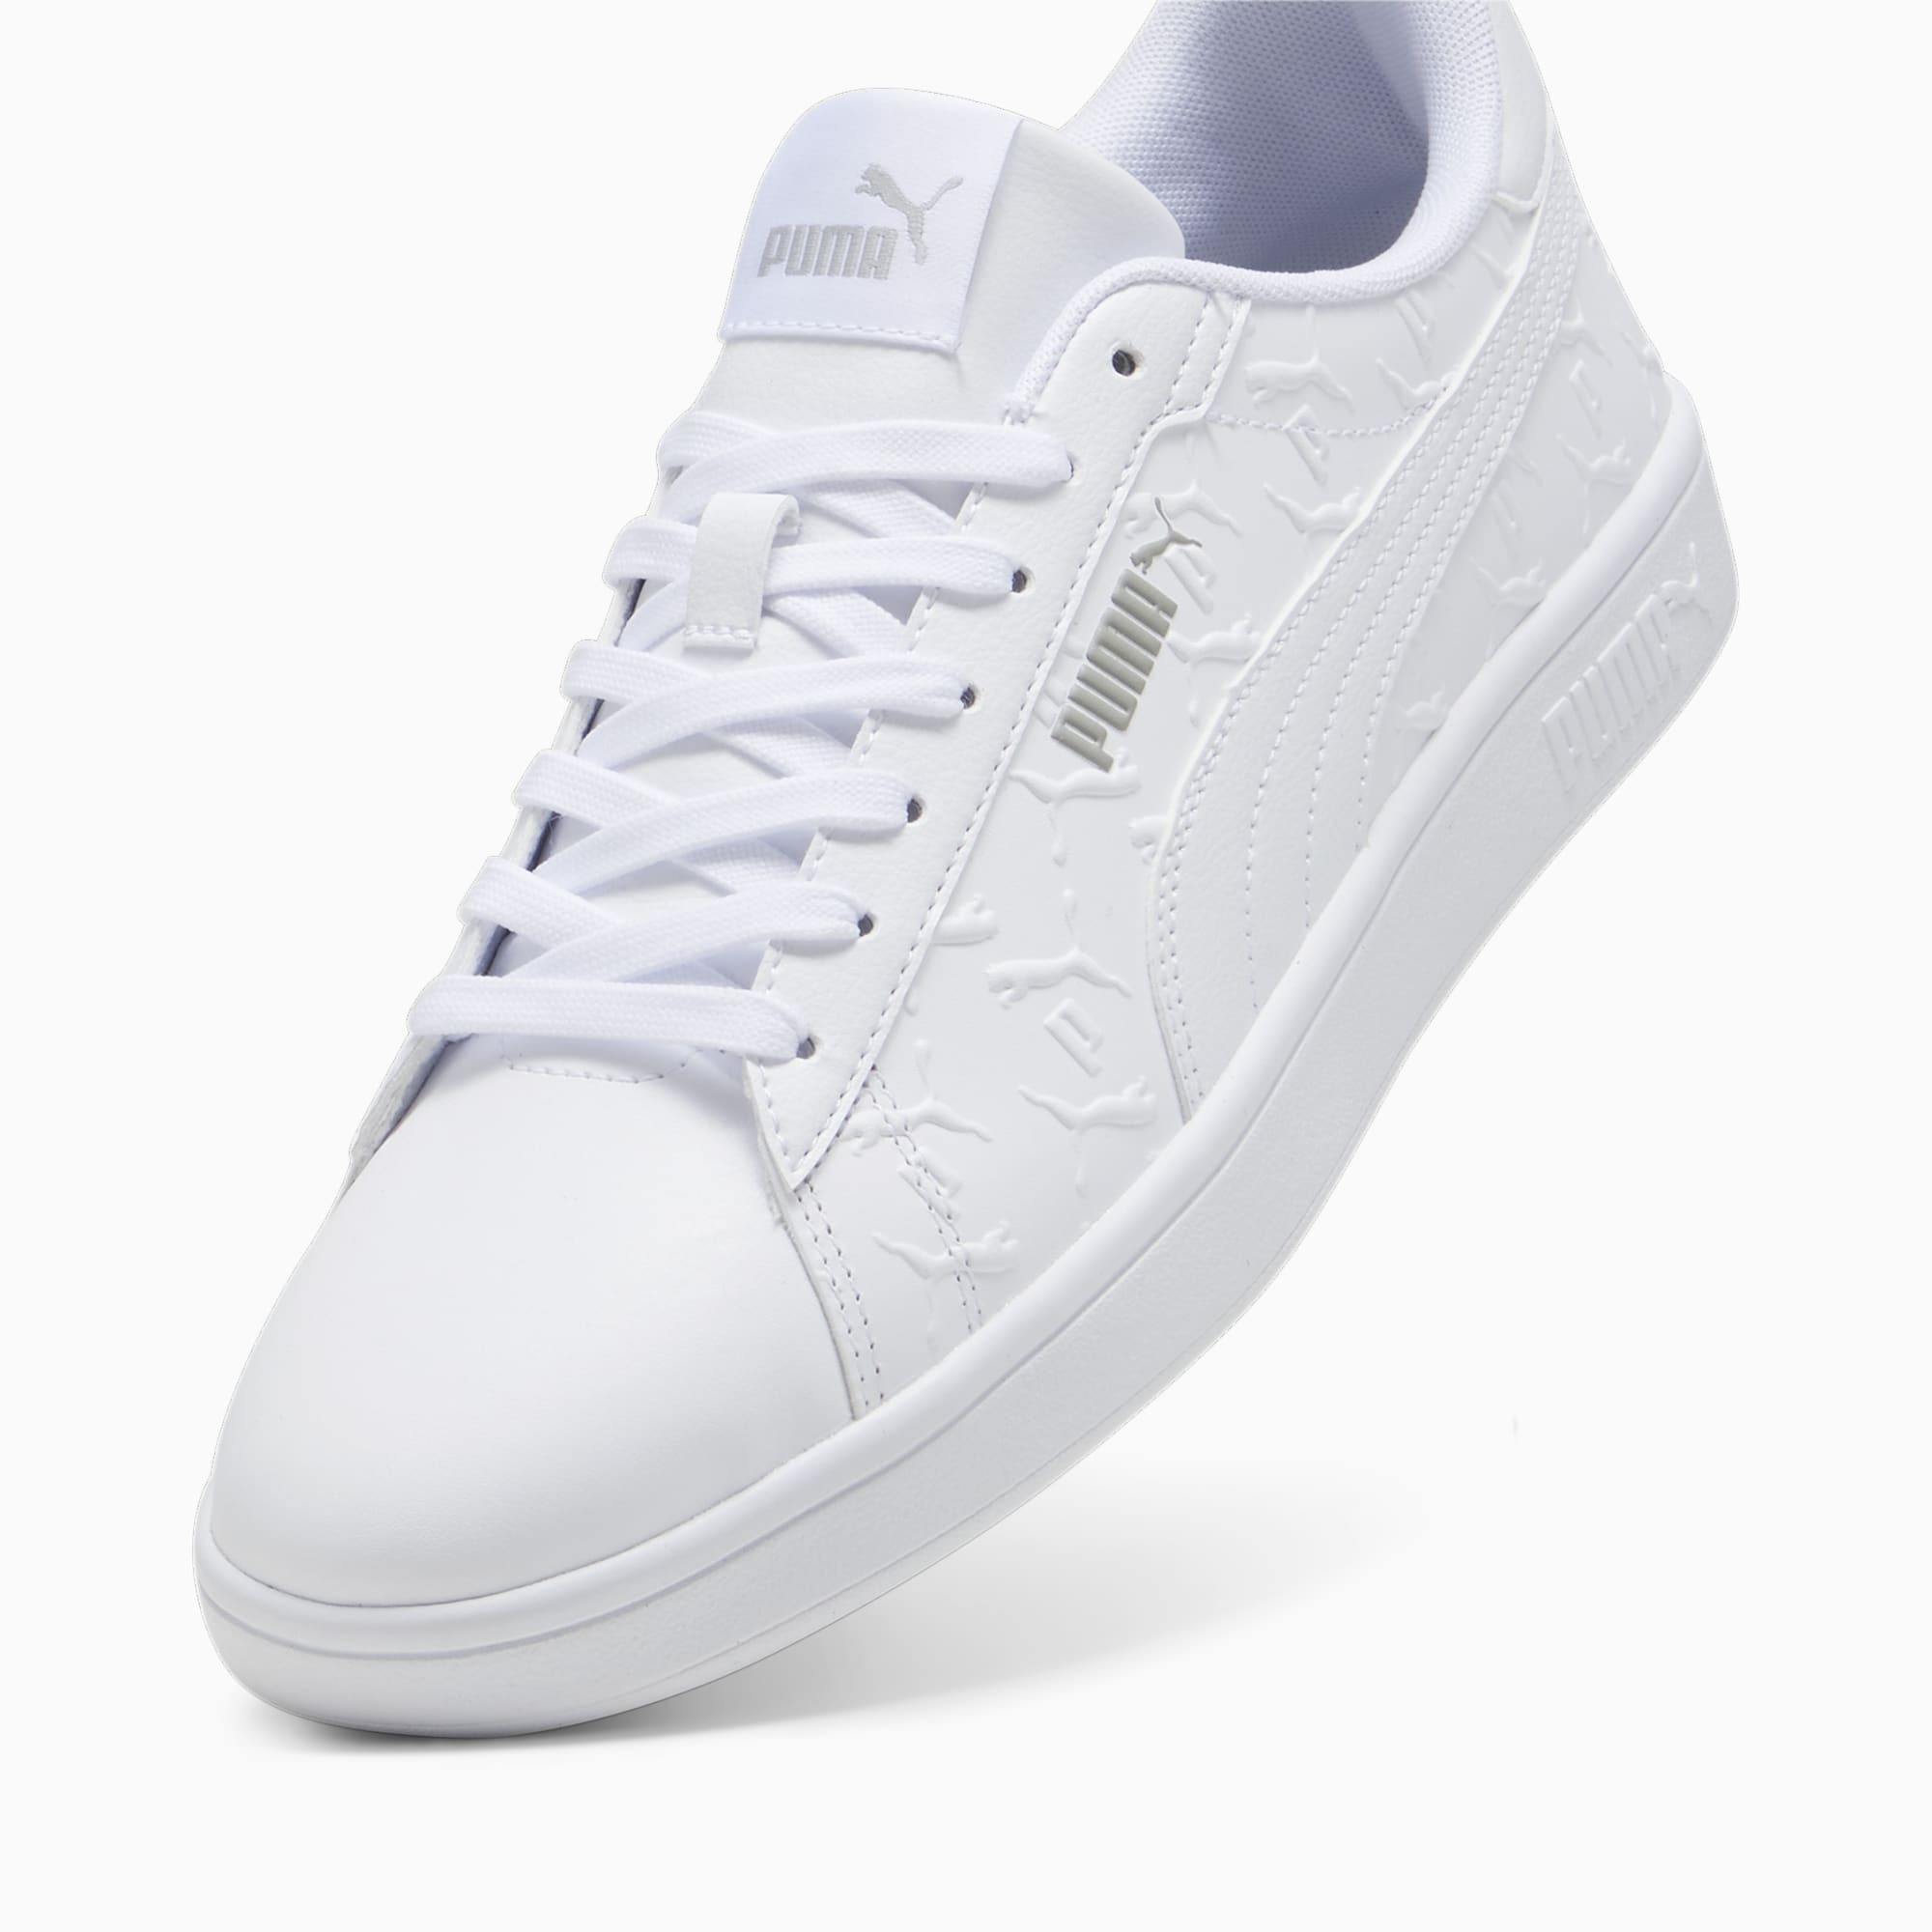 Giày Sneaker Chính Hãng - Puma Smash 3.0 Superlogo Unisex 'White' - 395090-02